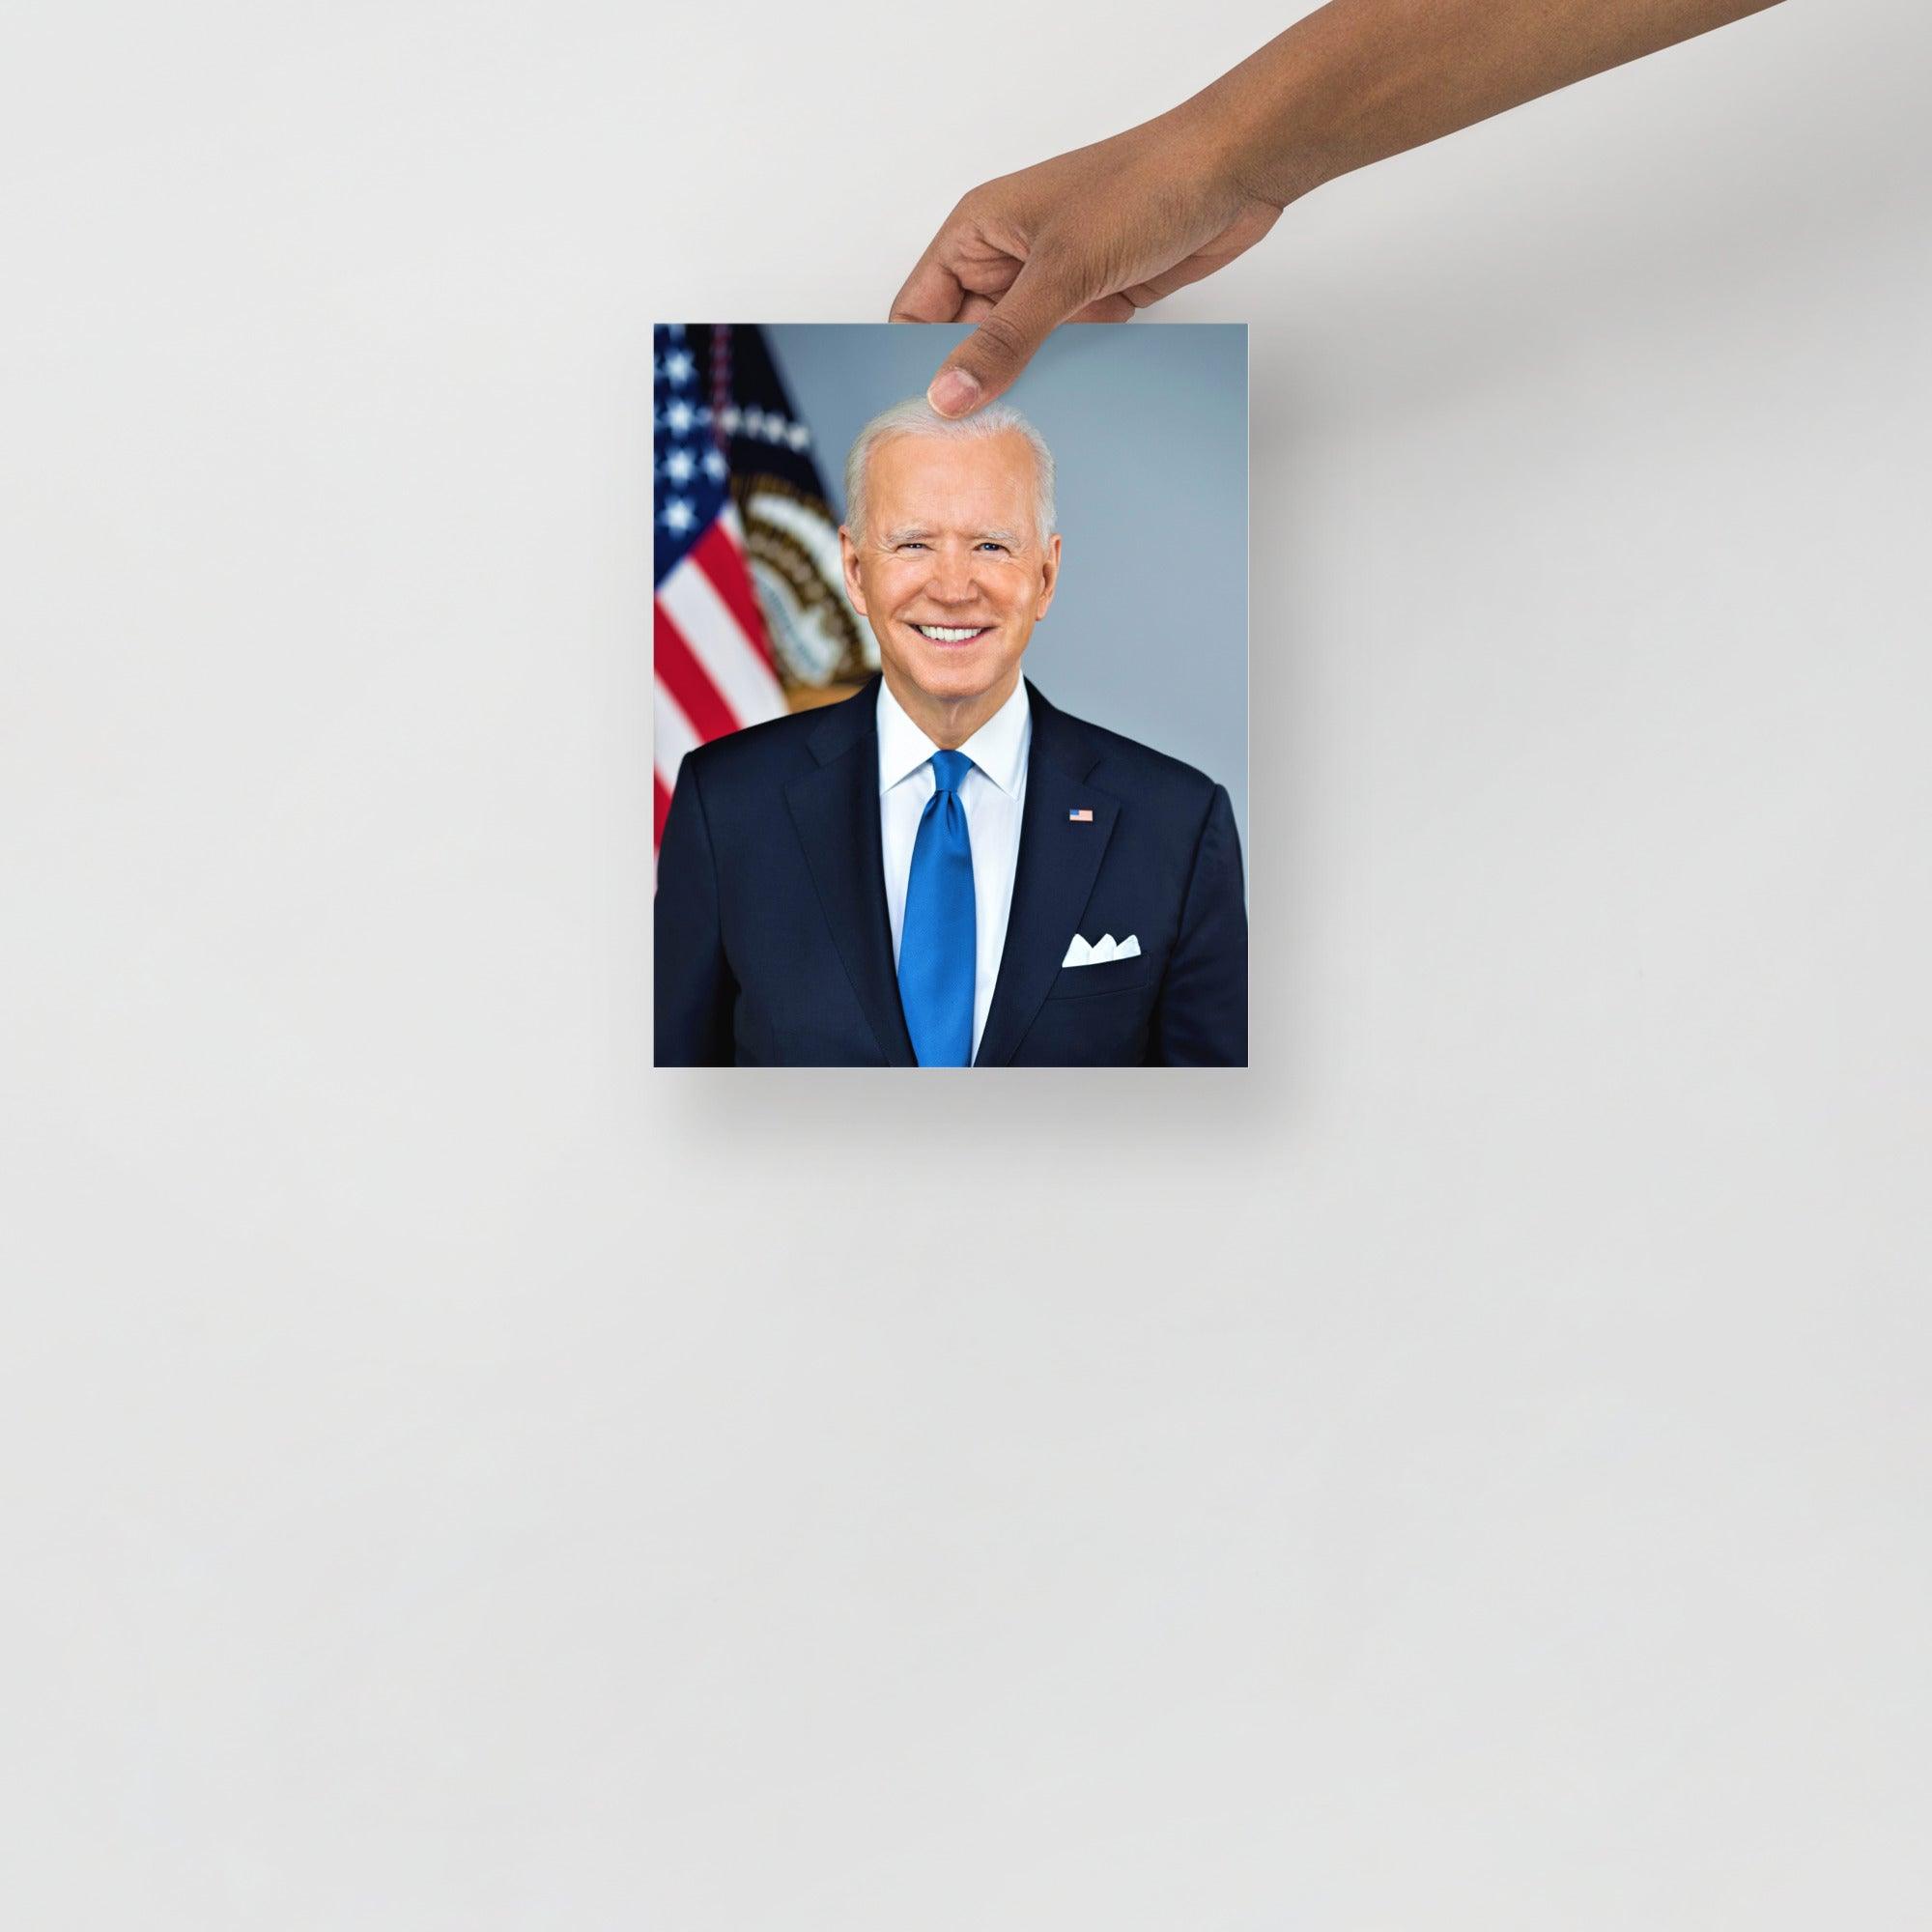 A Joe Biden Official Portrait poster on a plain backdrop in size 8x10”.